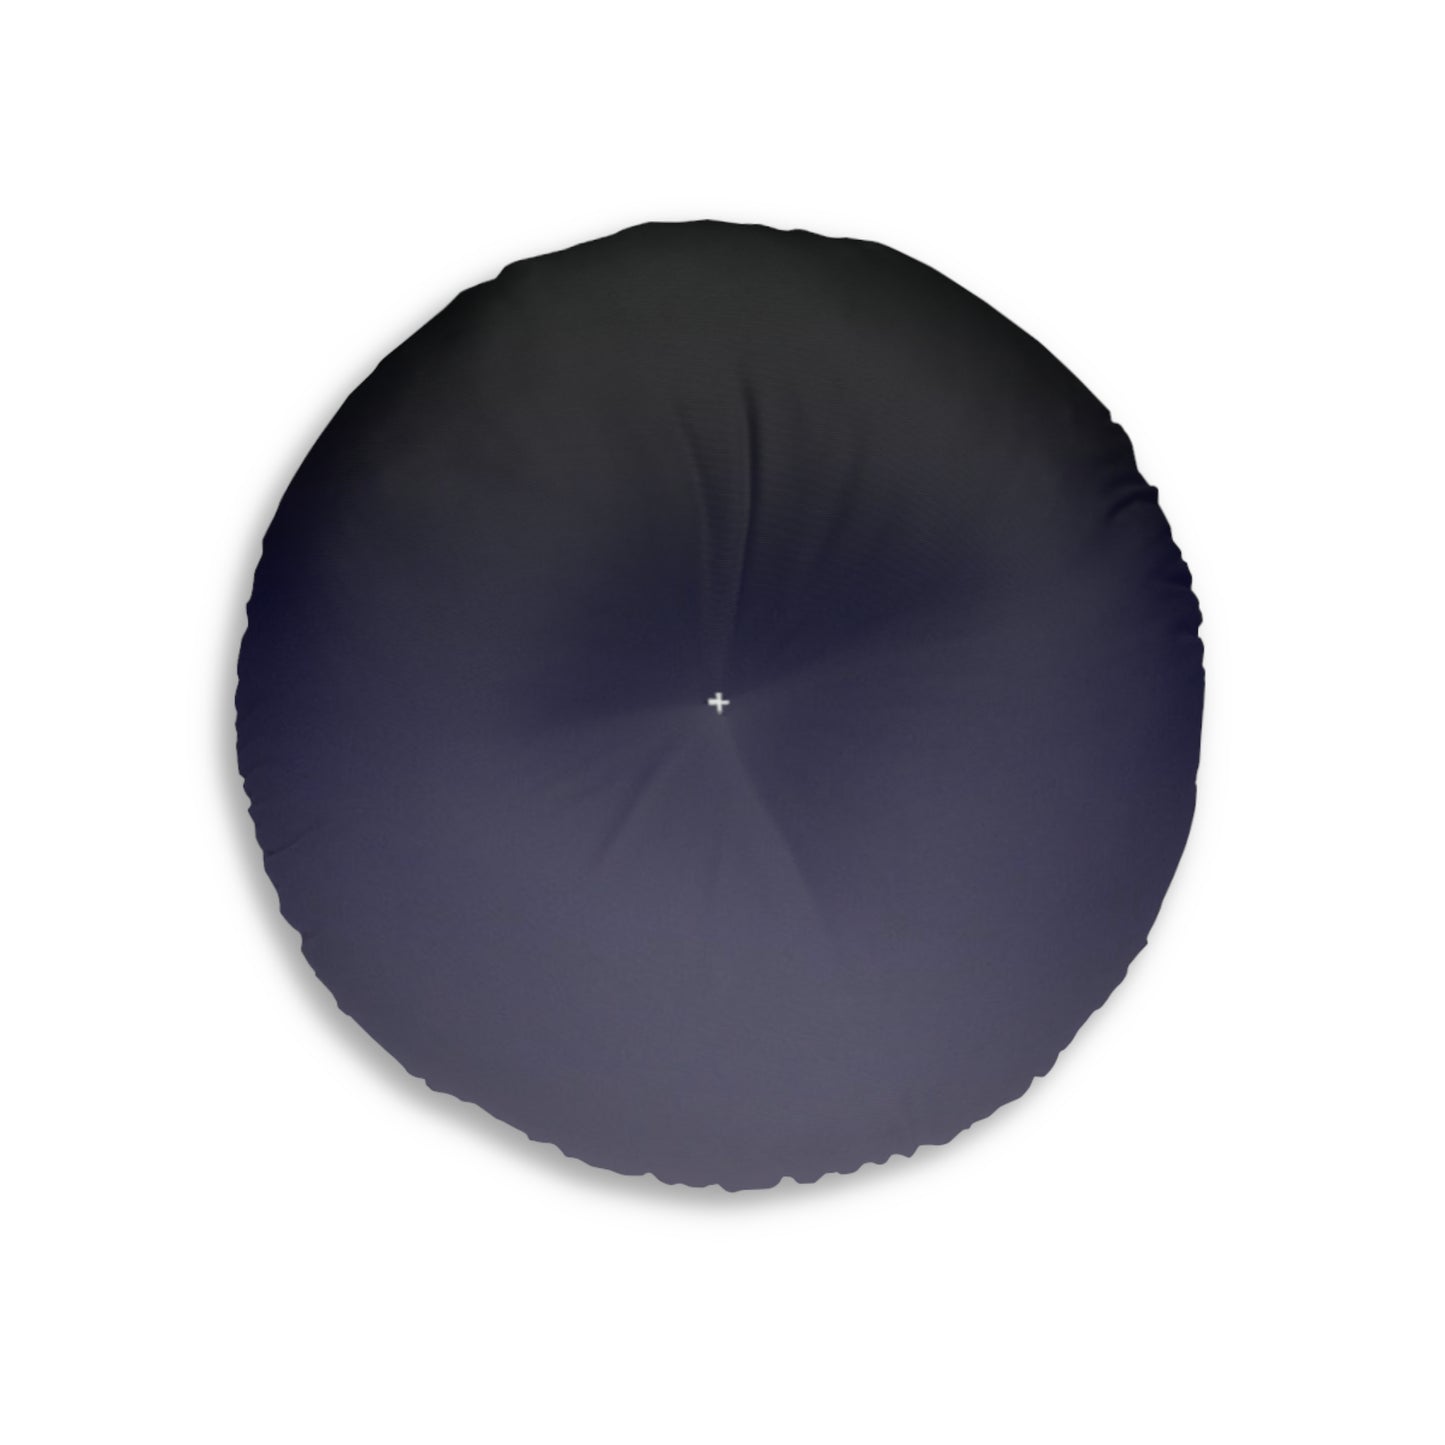 SCA LOGO Black | Tufted Floor Pillow, 2 sizes